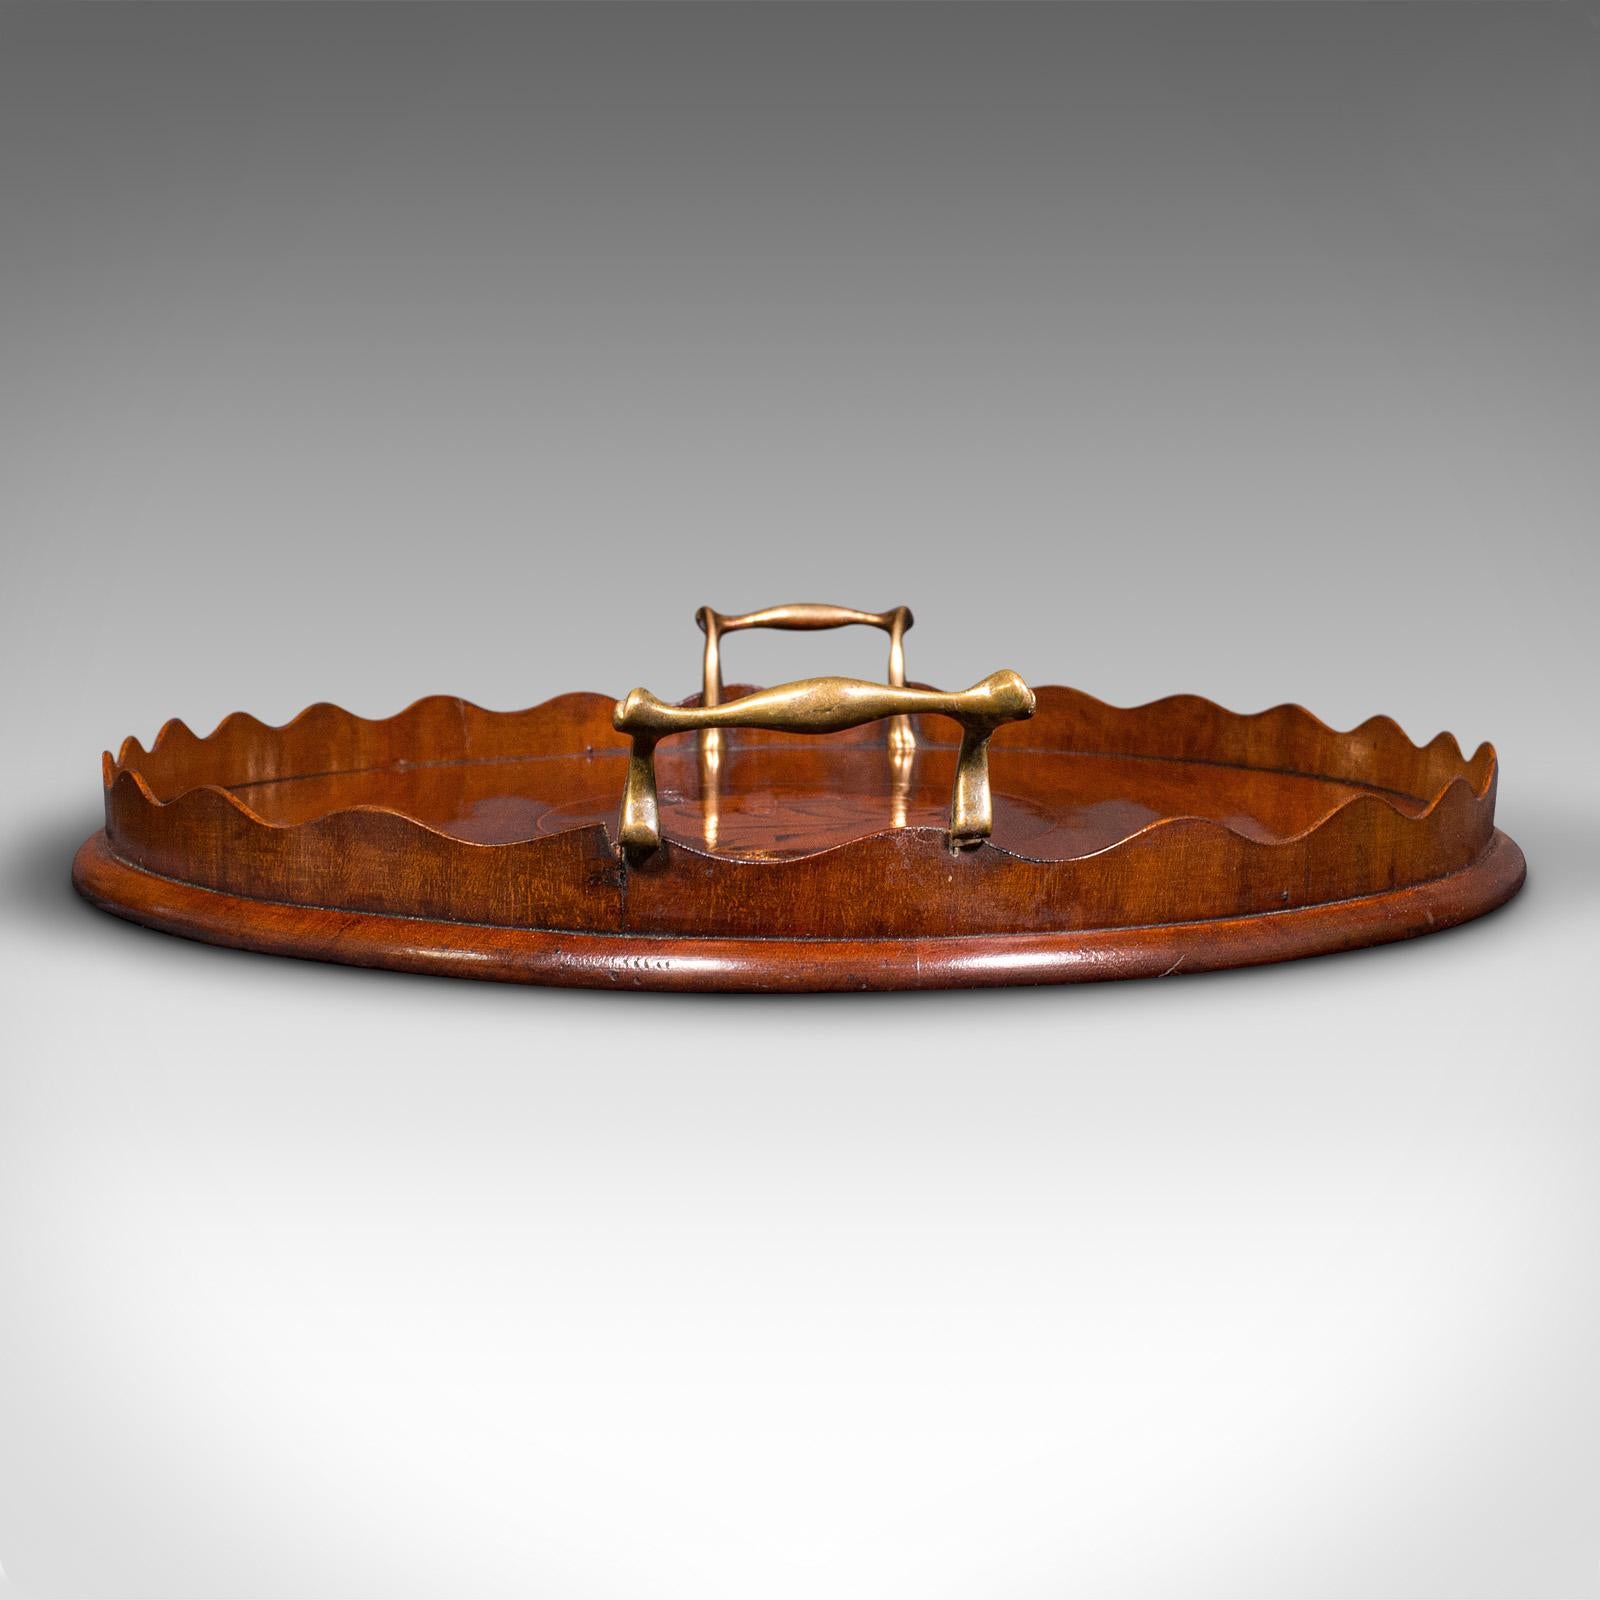 Brass Antique Decorative Afternoon Tea Tray, English, Serving Platter, Regency, C.1820 For Sale